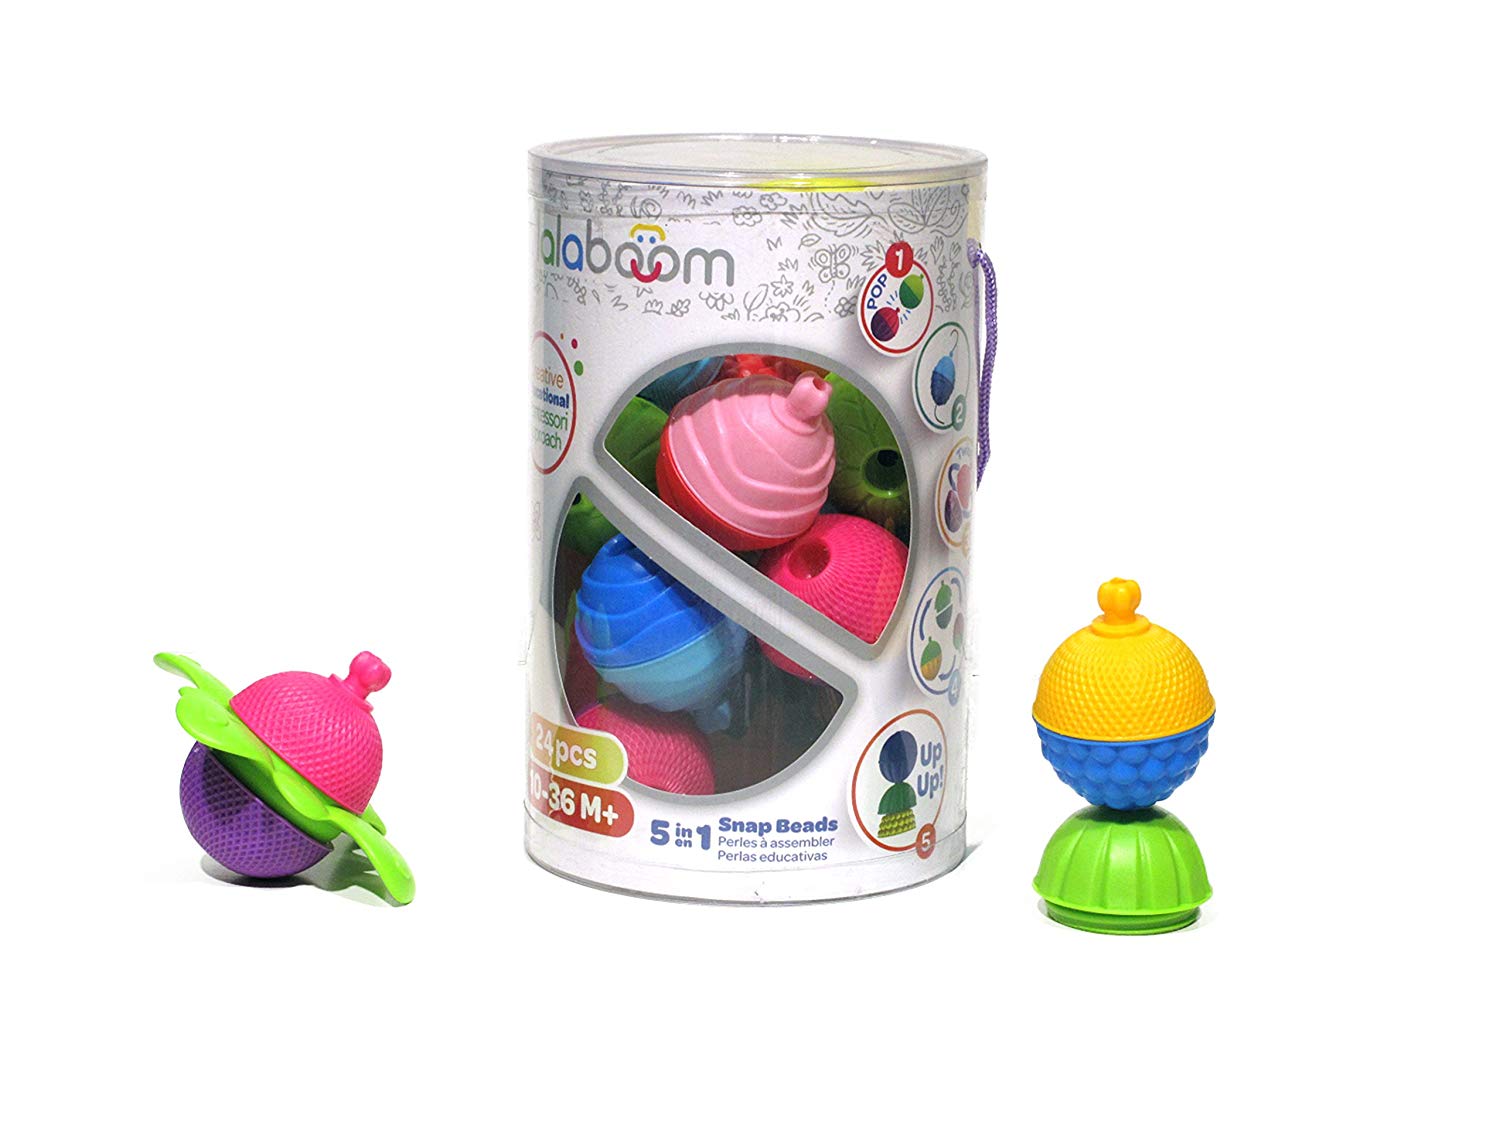  Lalaboom 36 Piece Baby Toddler Beads – Montessori